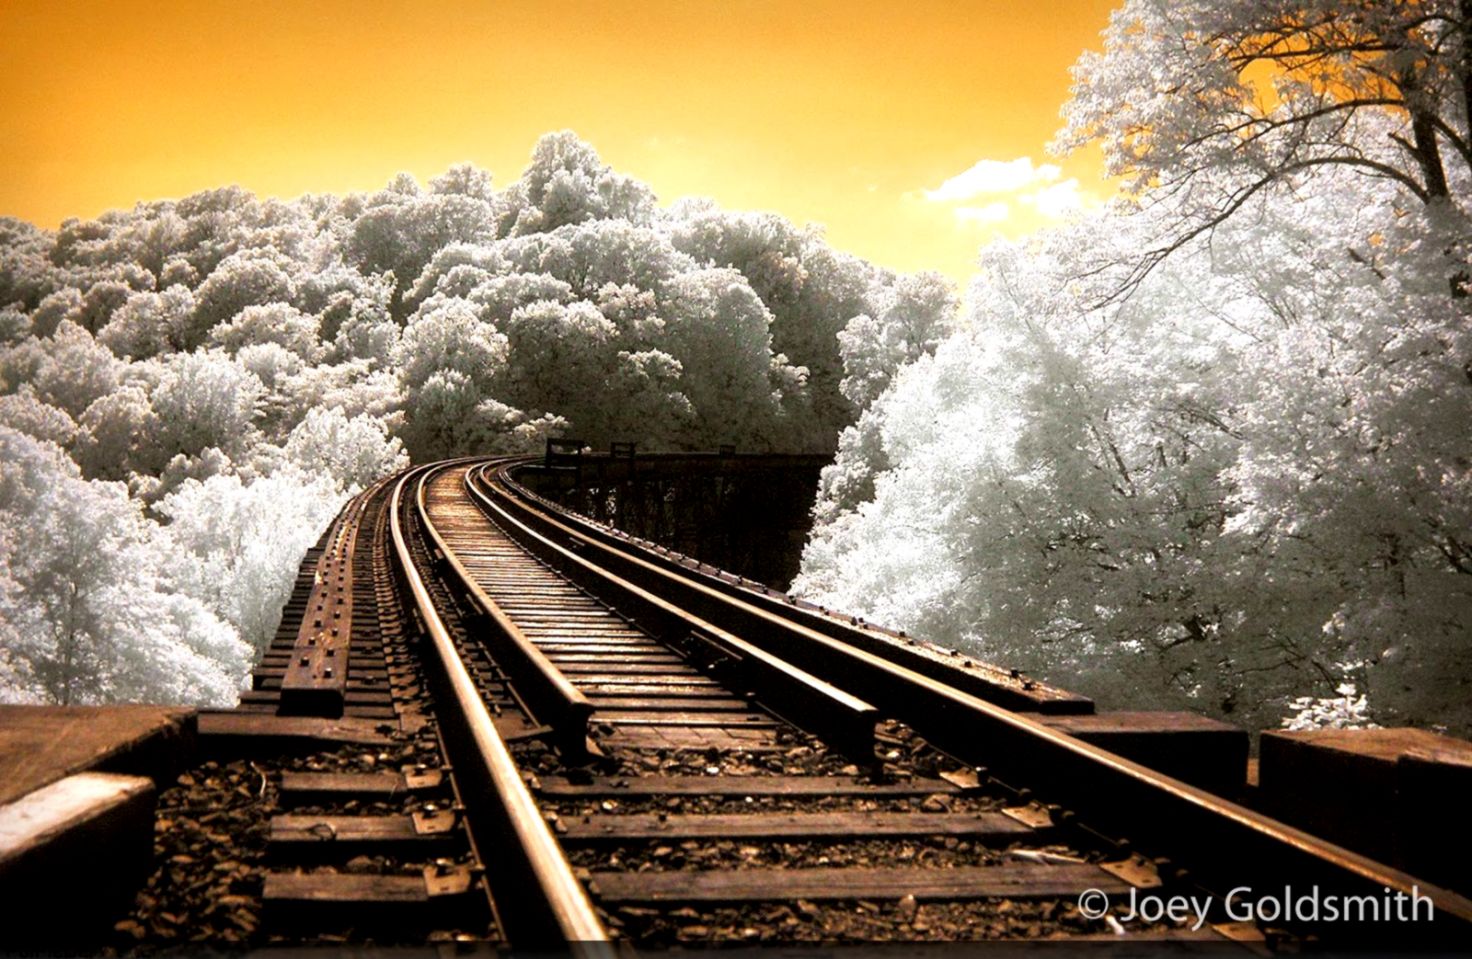 Hd Train Tracks Wallpaper Wallpapersafari - Background Hd For Photoshop Editing - HD Wallpaper 